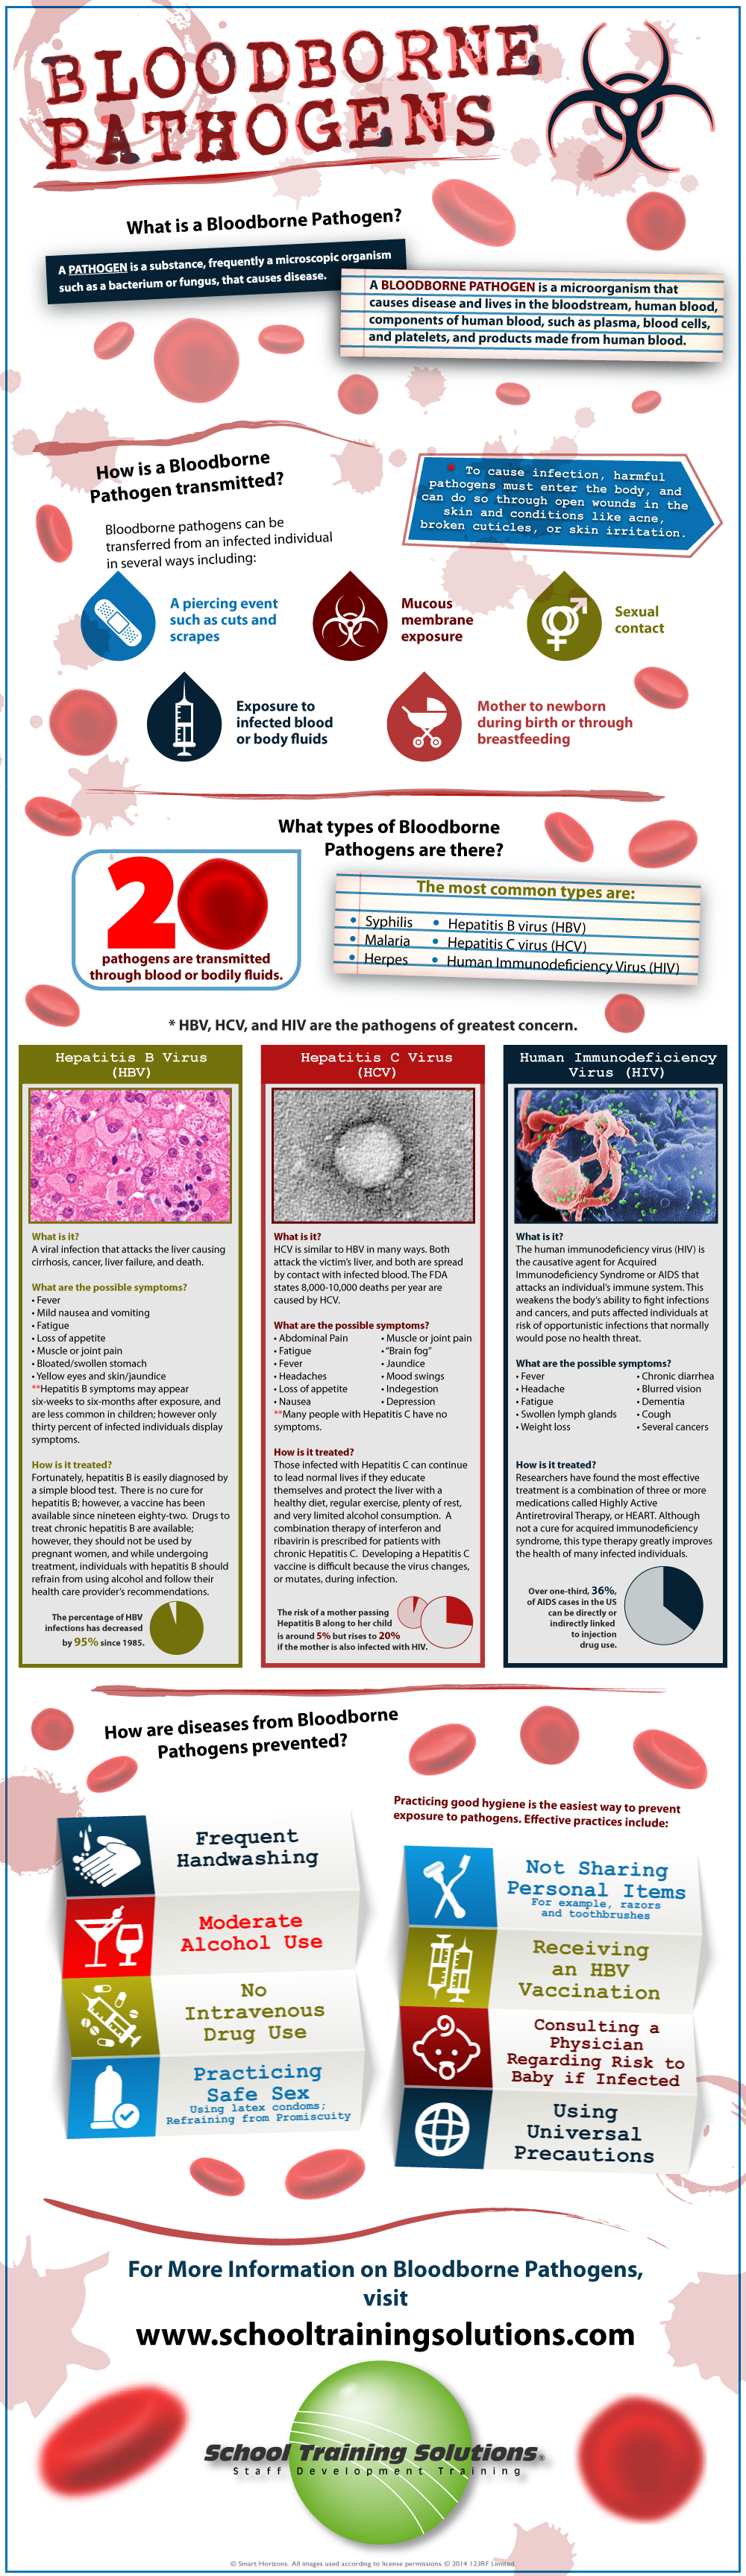 school-training-solutions-bloodborne-pathogens-infographic